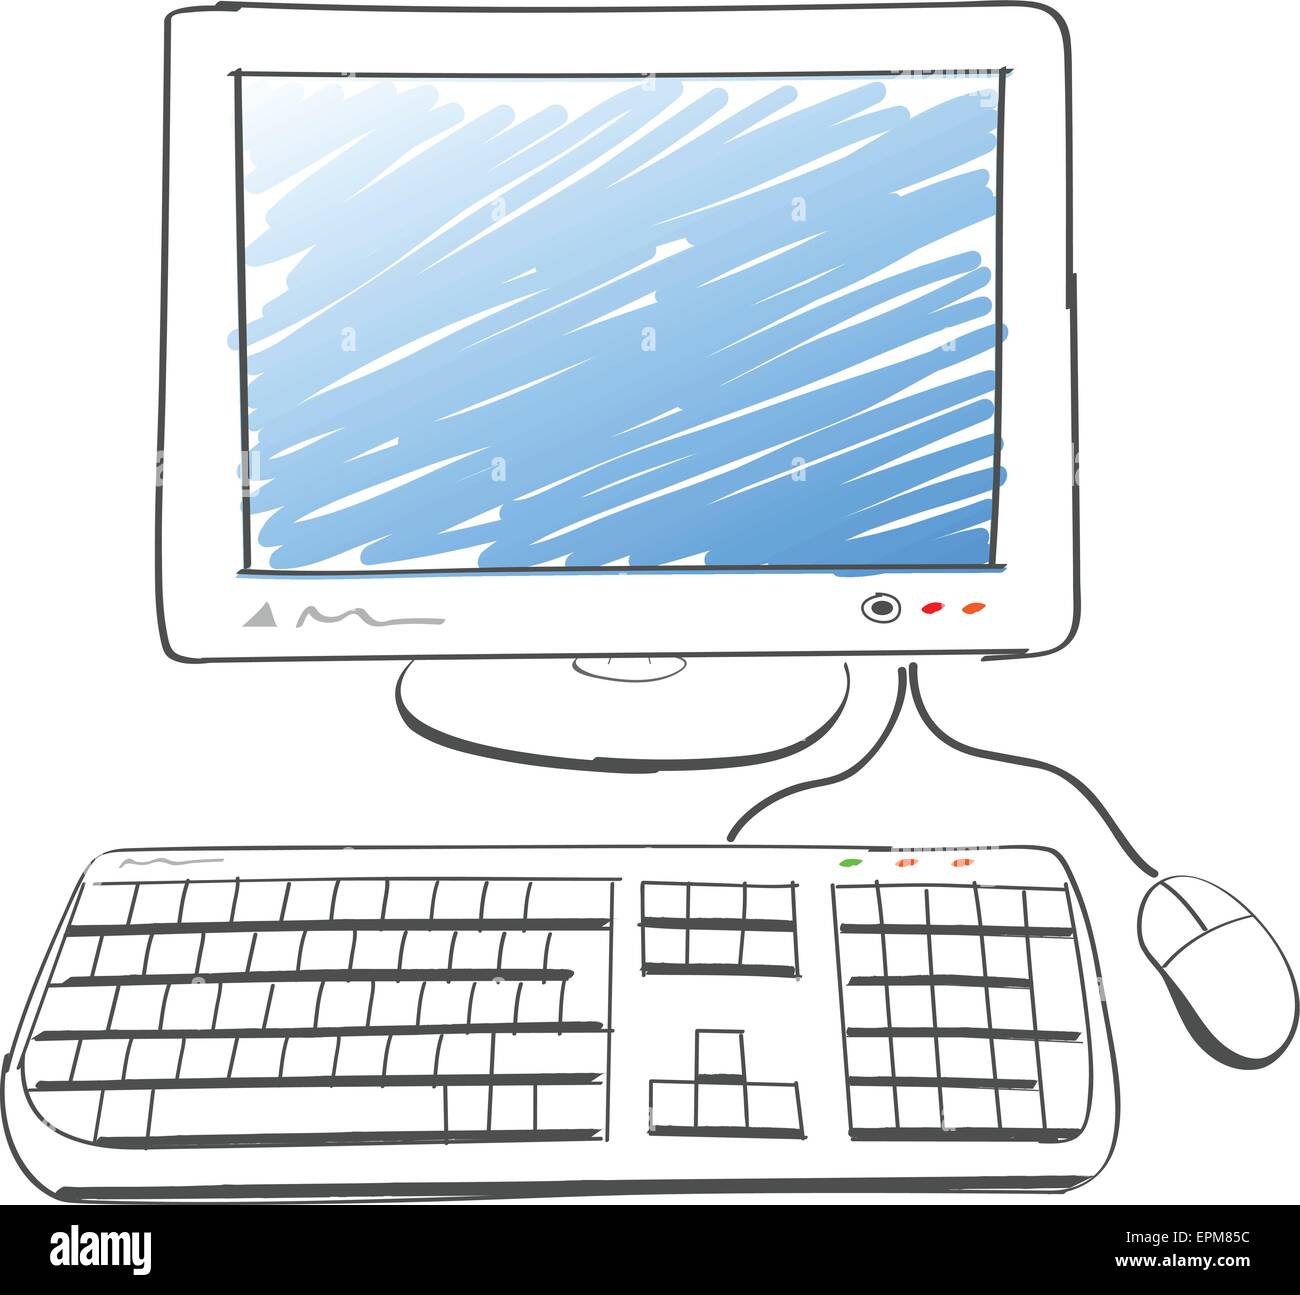 760 Computer Sketch Desktop Pc Desk Illustrations RoyaltyFree Vector  Graphics  Clip Art  iStock